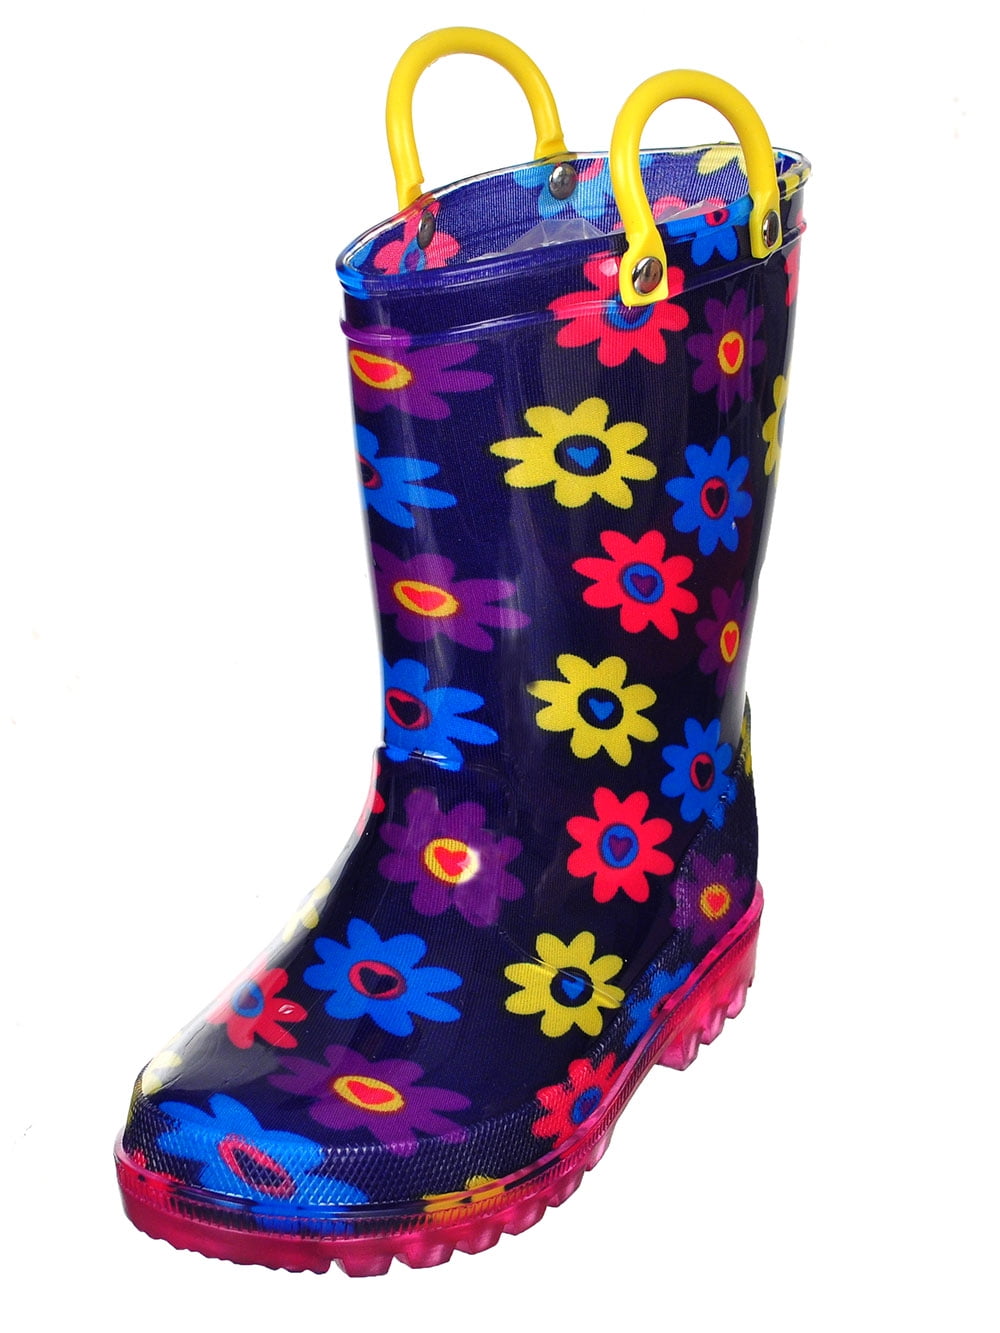 light up rain boots for girls